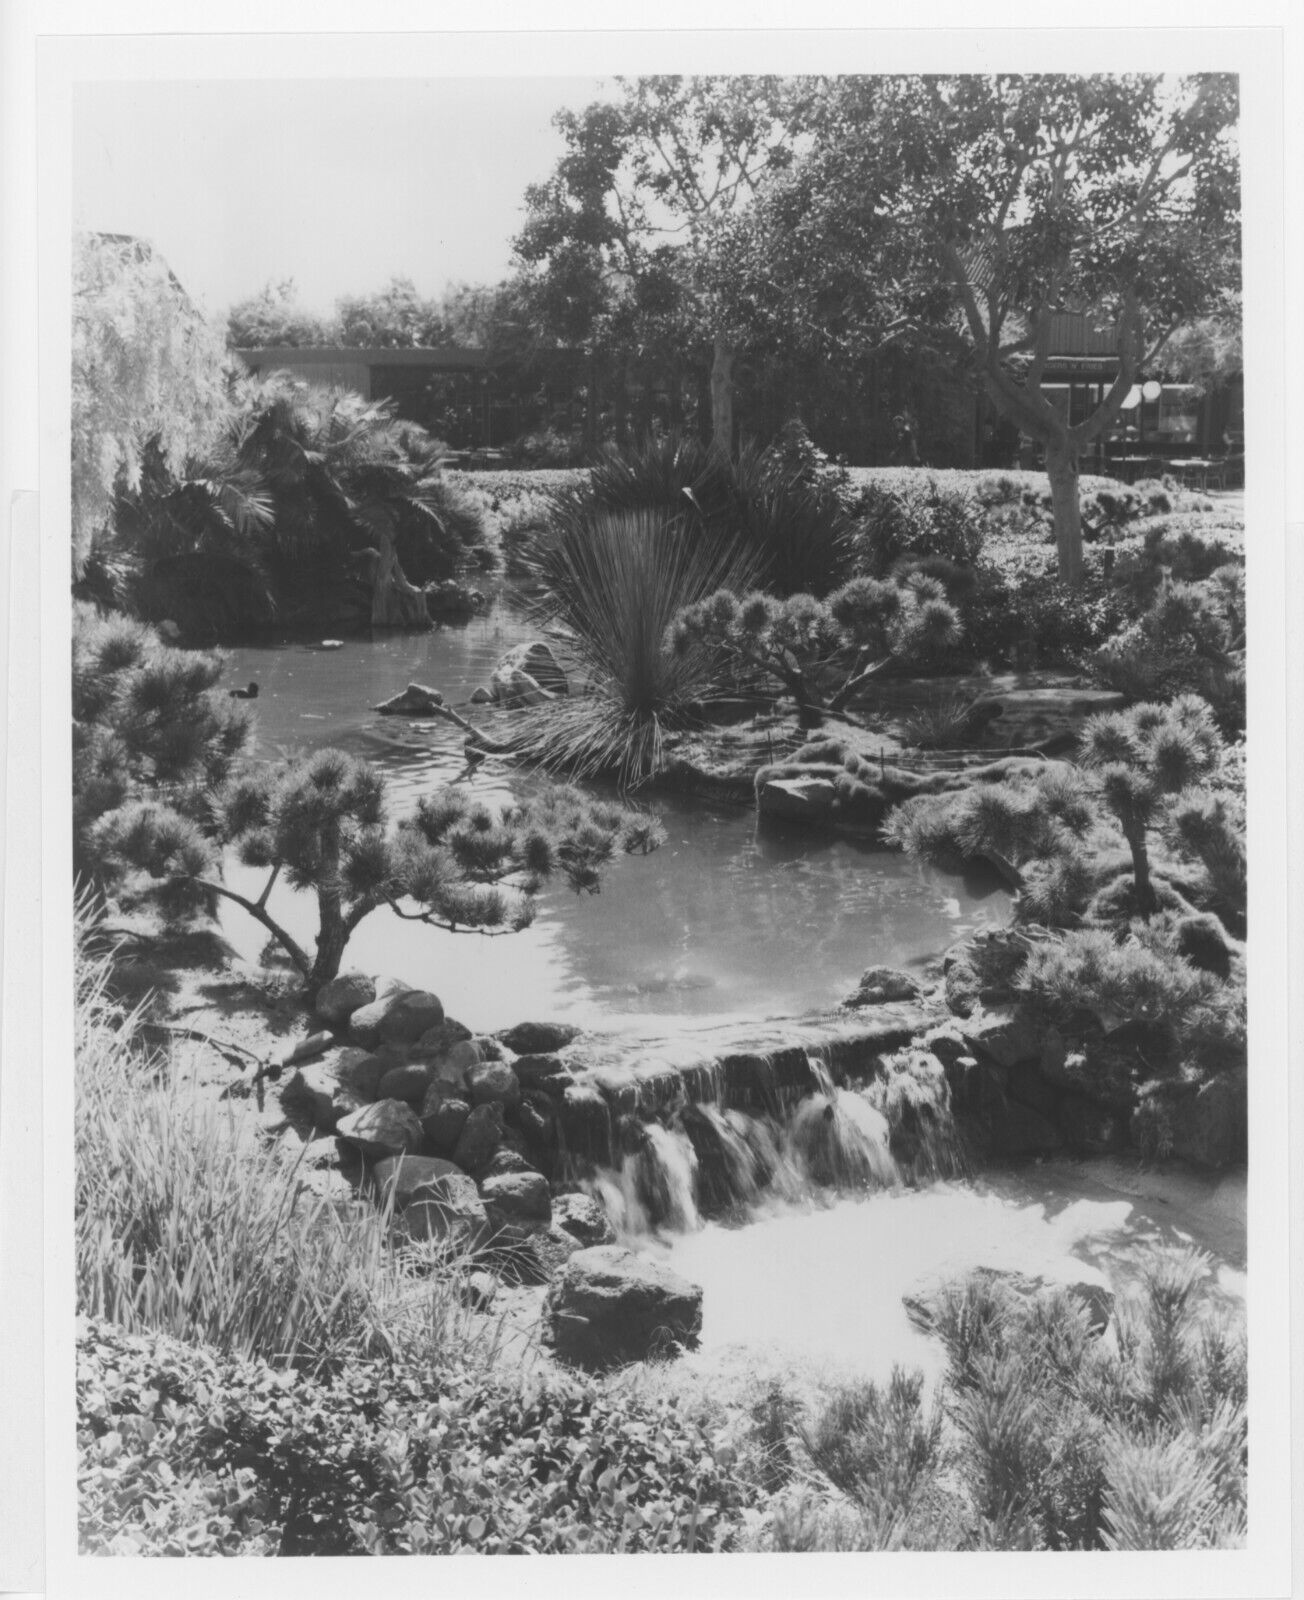 1985 Press Photo Sea World Aquarium San Diego California Fountains Ponds Flowers